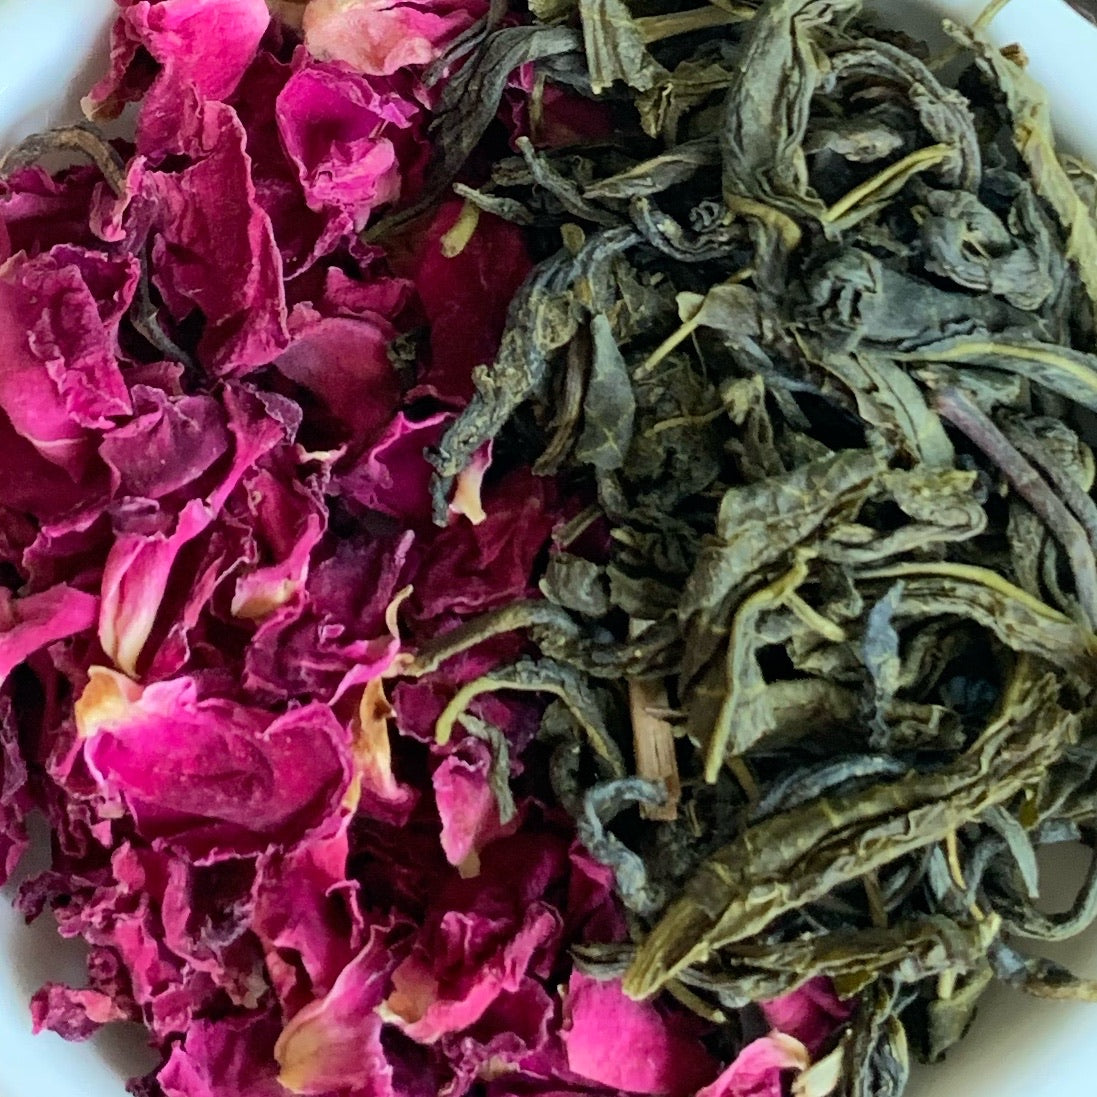 Rose Green Tea